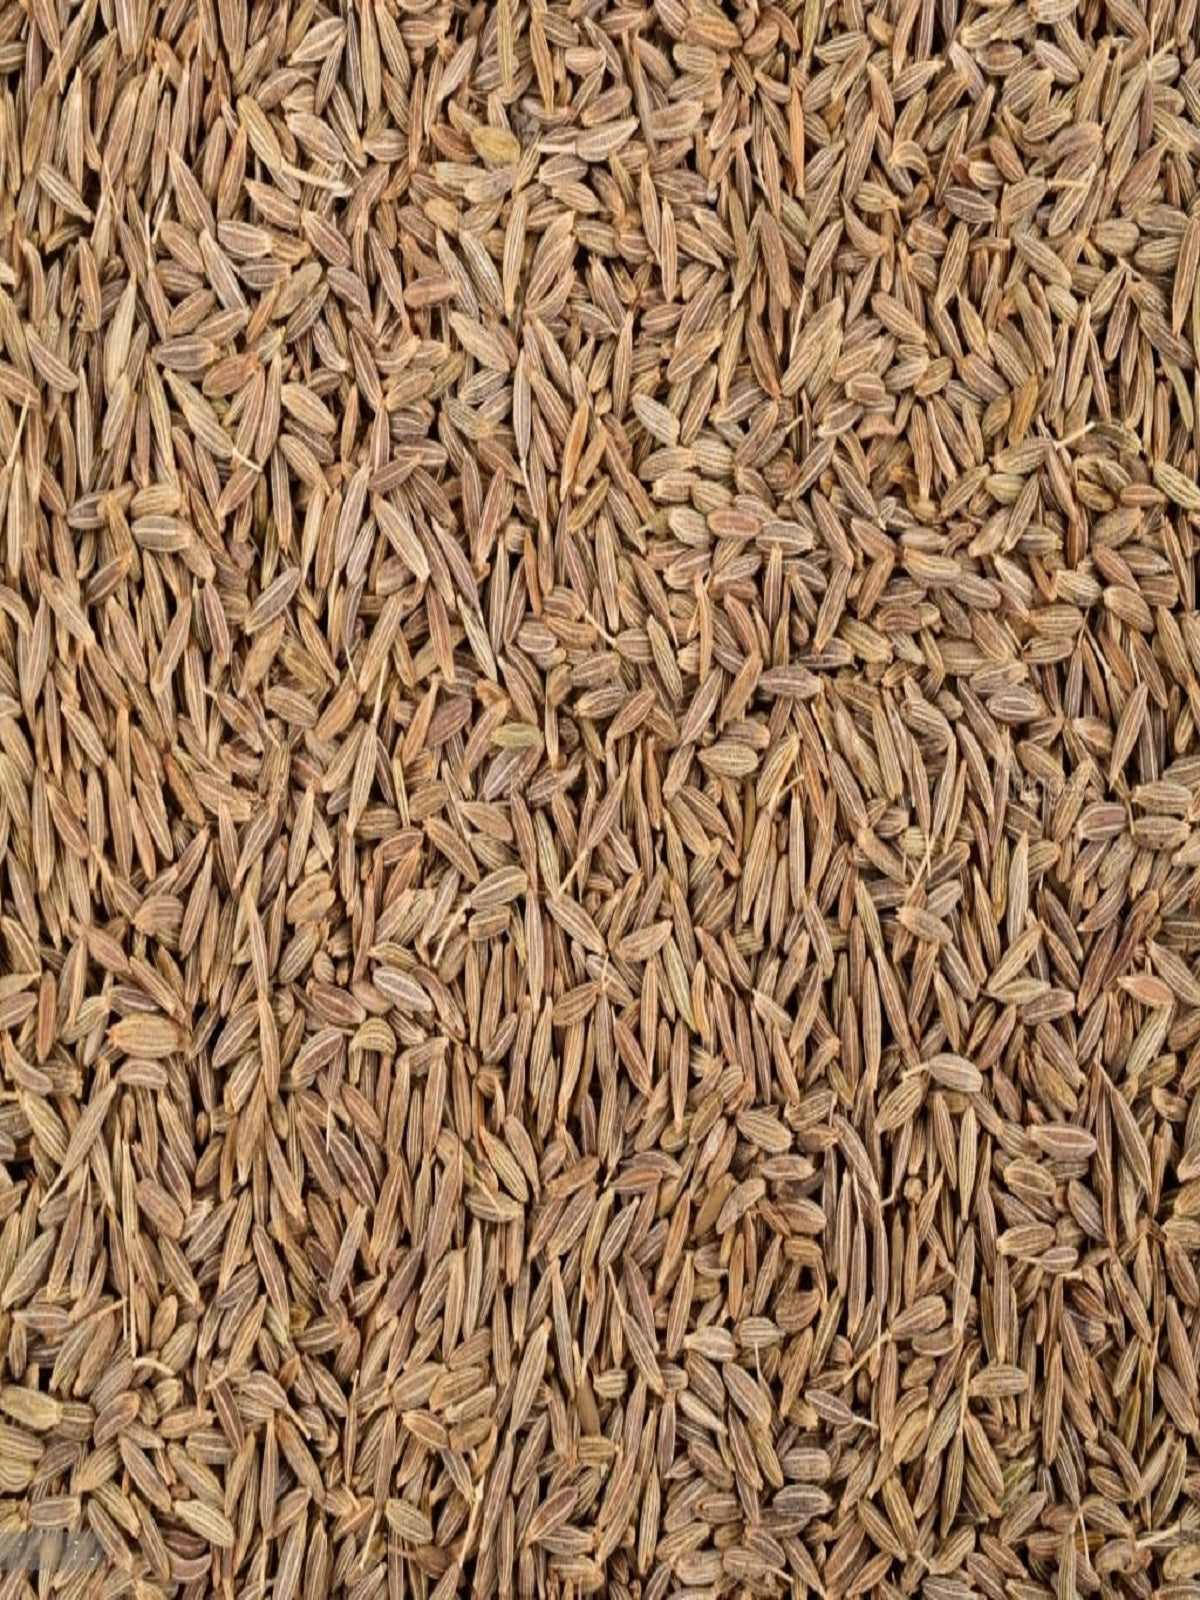 Cumin seeds- farmonics